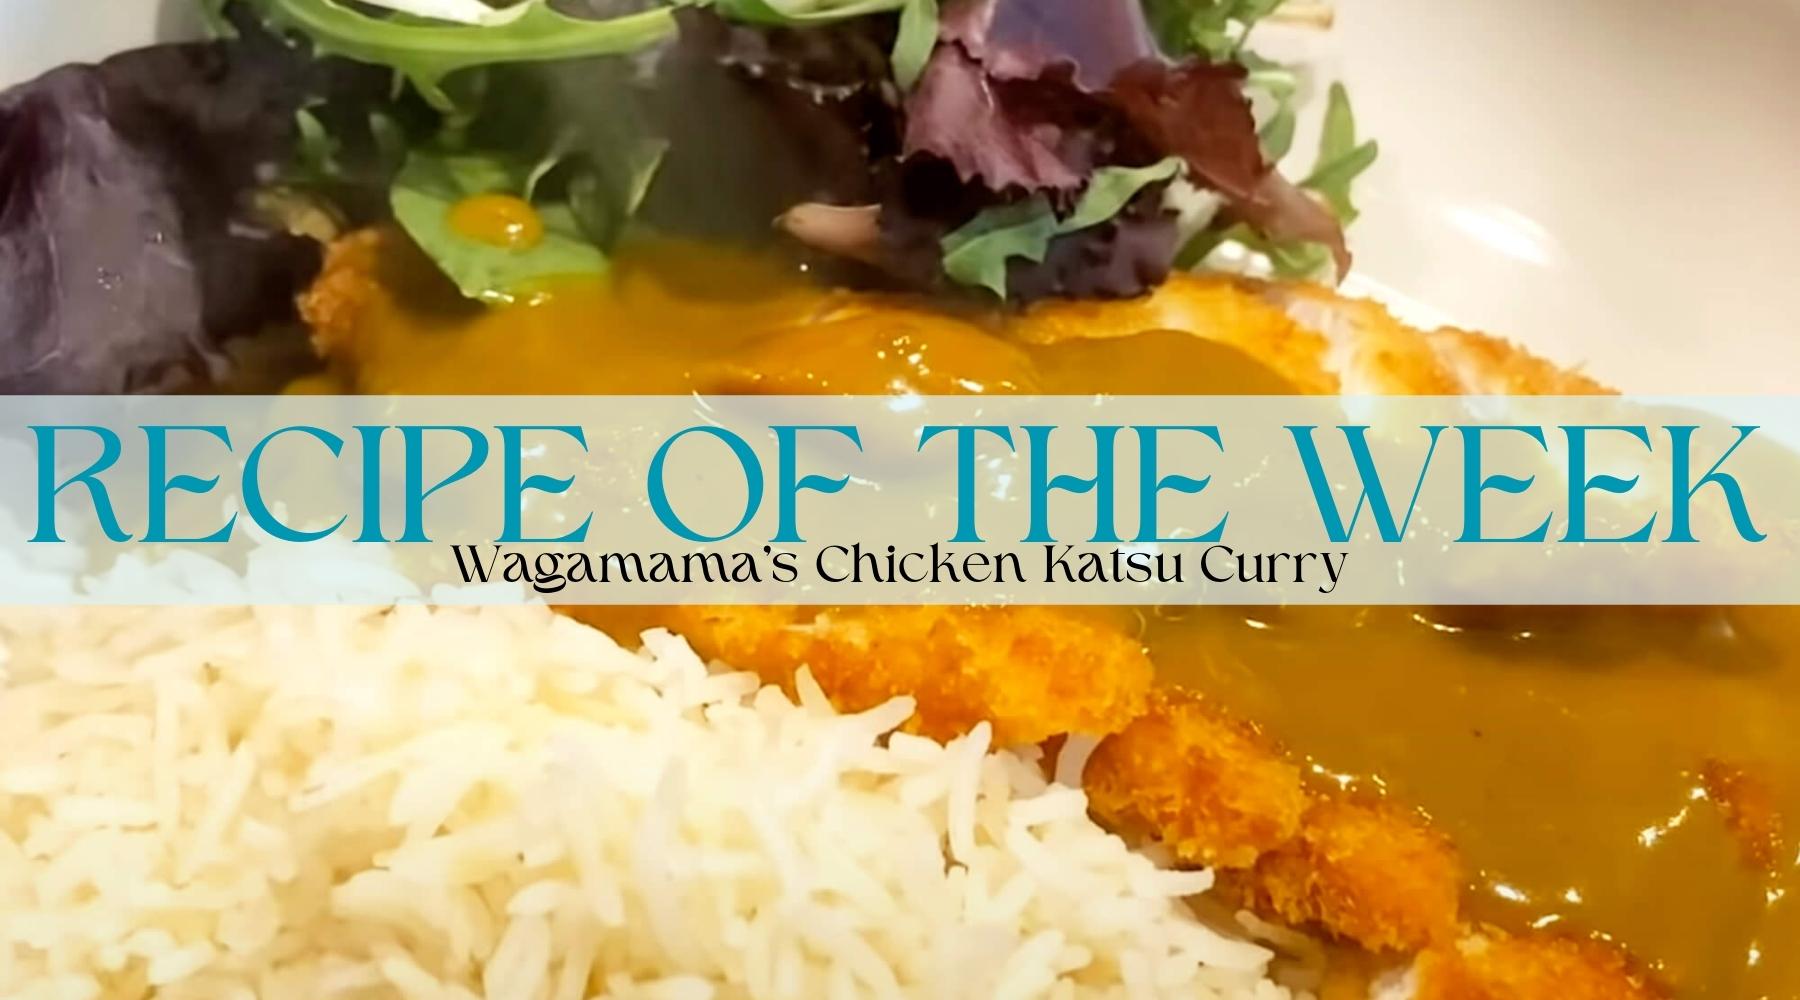 Wagamama's Chicken Katsu Curry Recipe